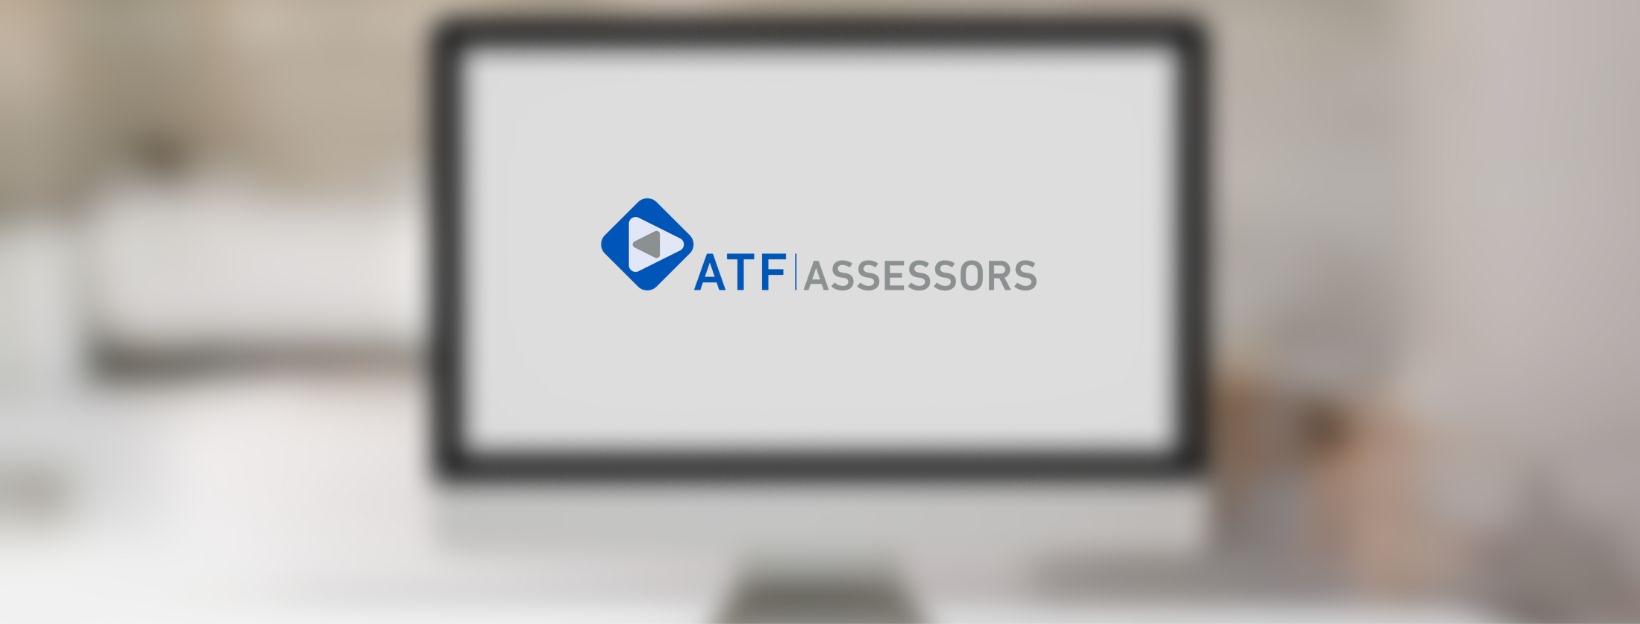 Nueva página web para ATF Assessors